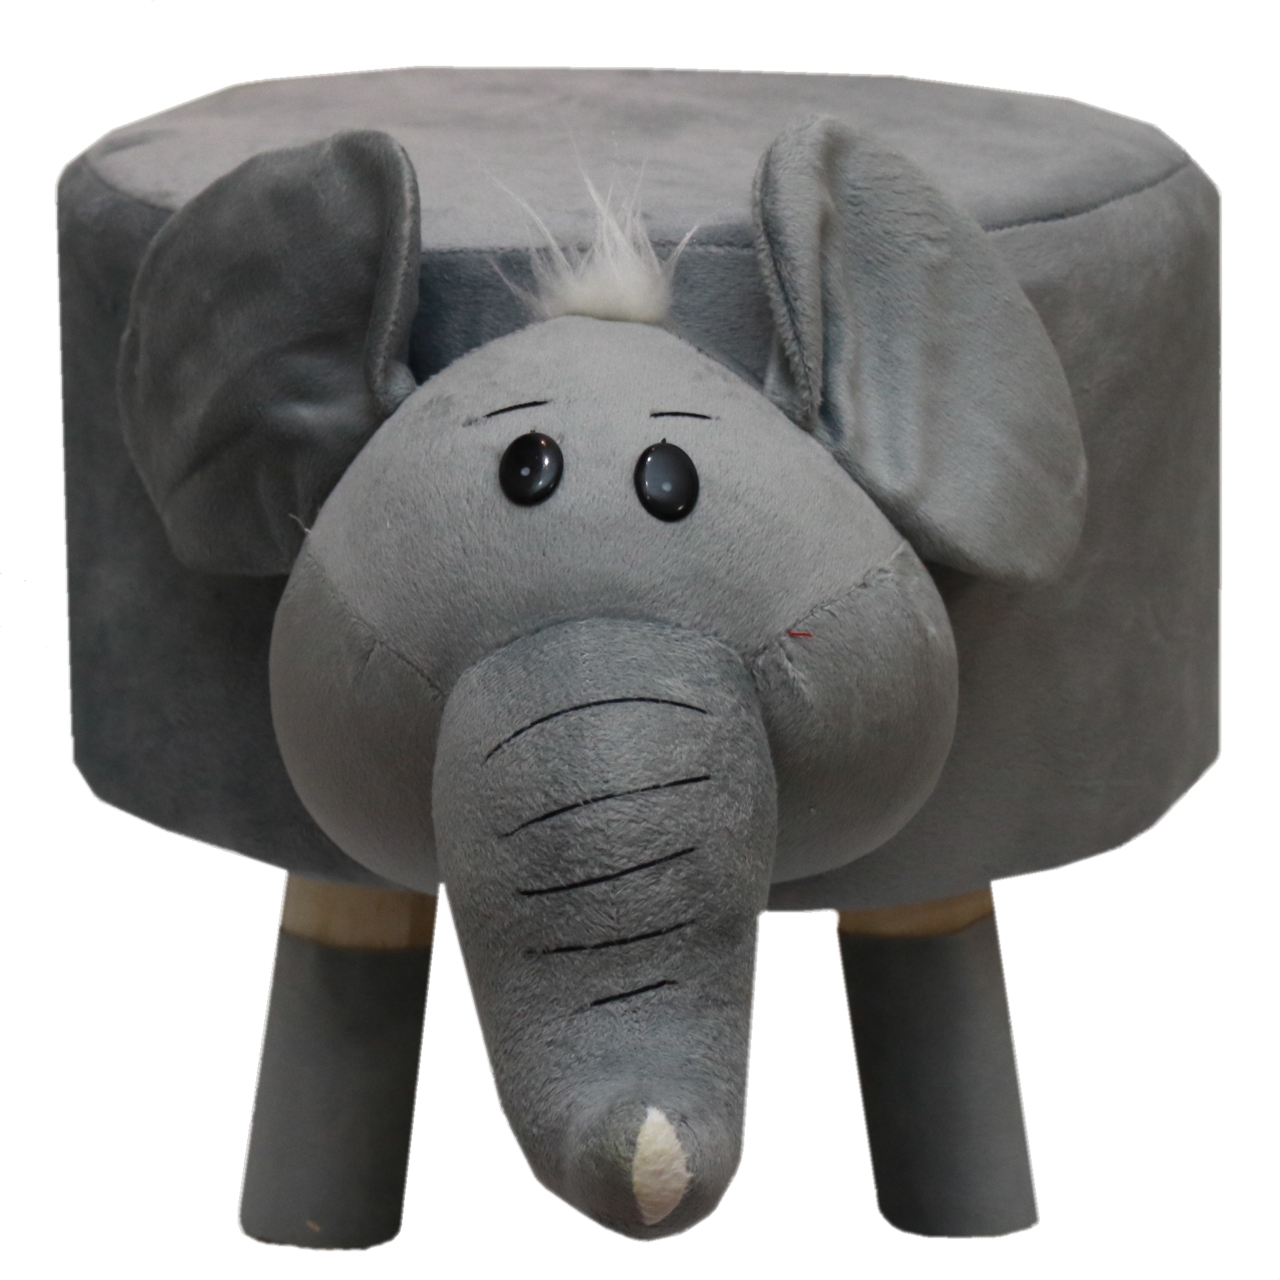 پاف کودک مدل فیل